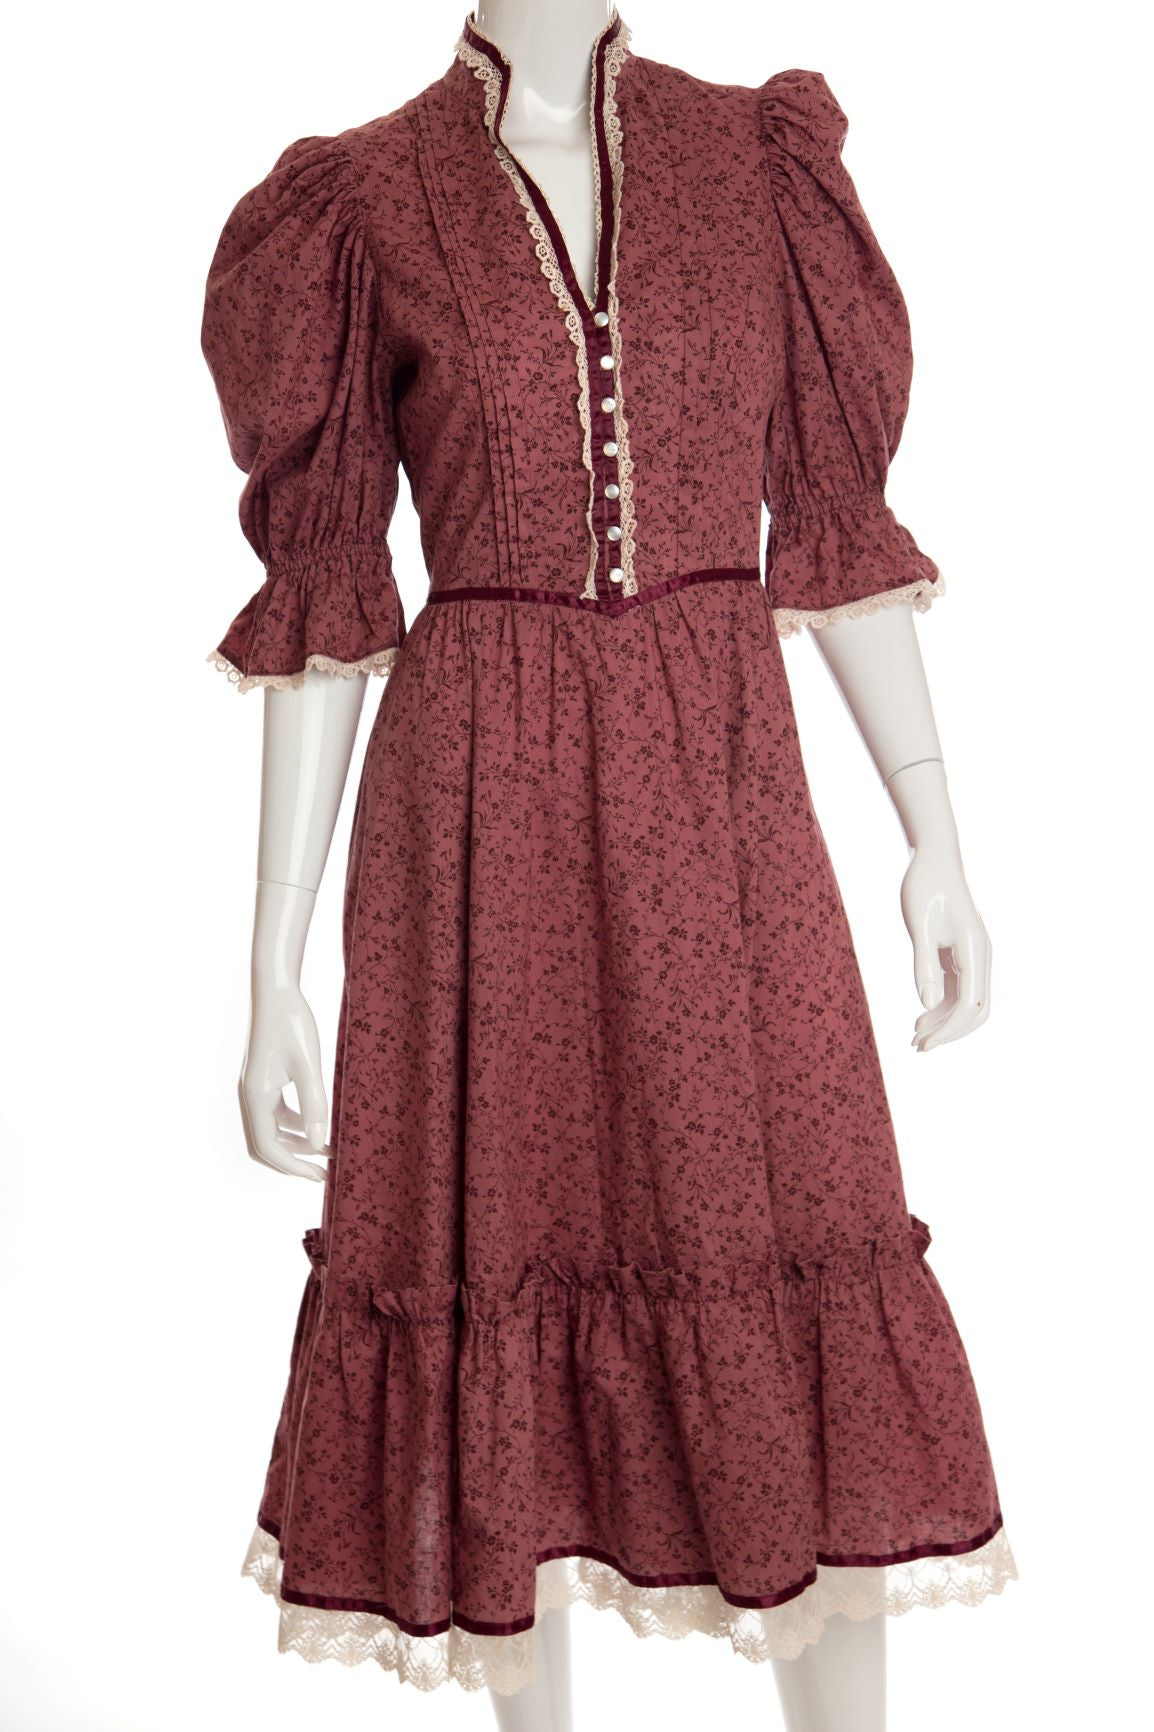 Vintage - Calico Print Cotton Dress